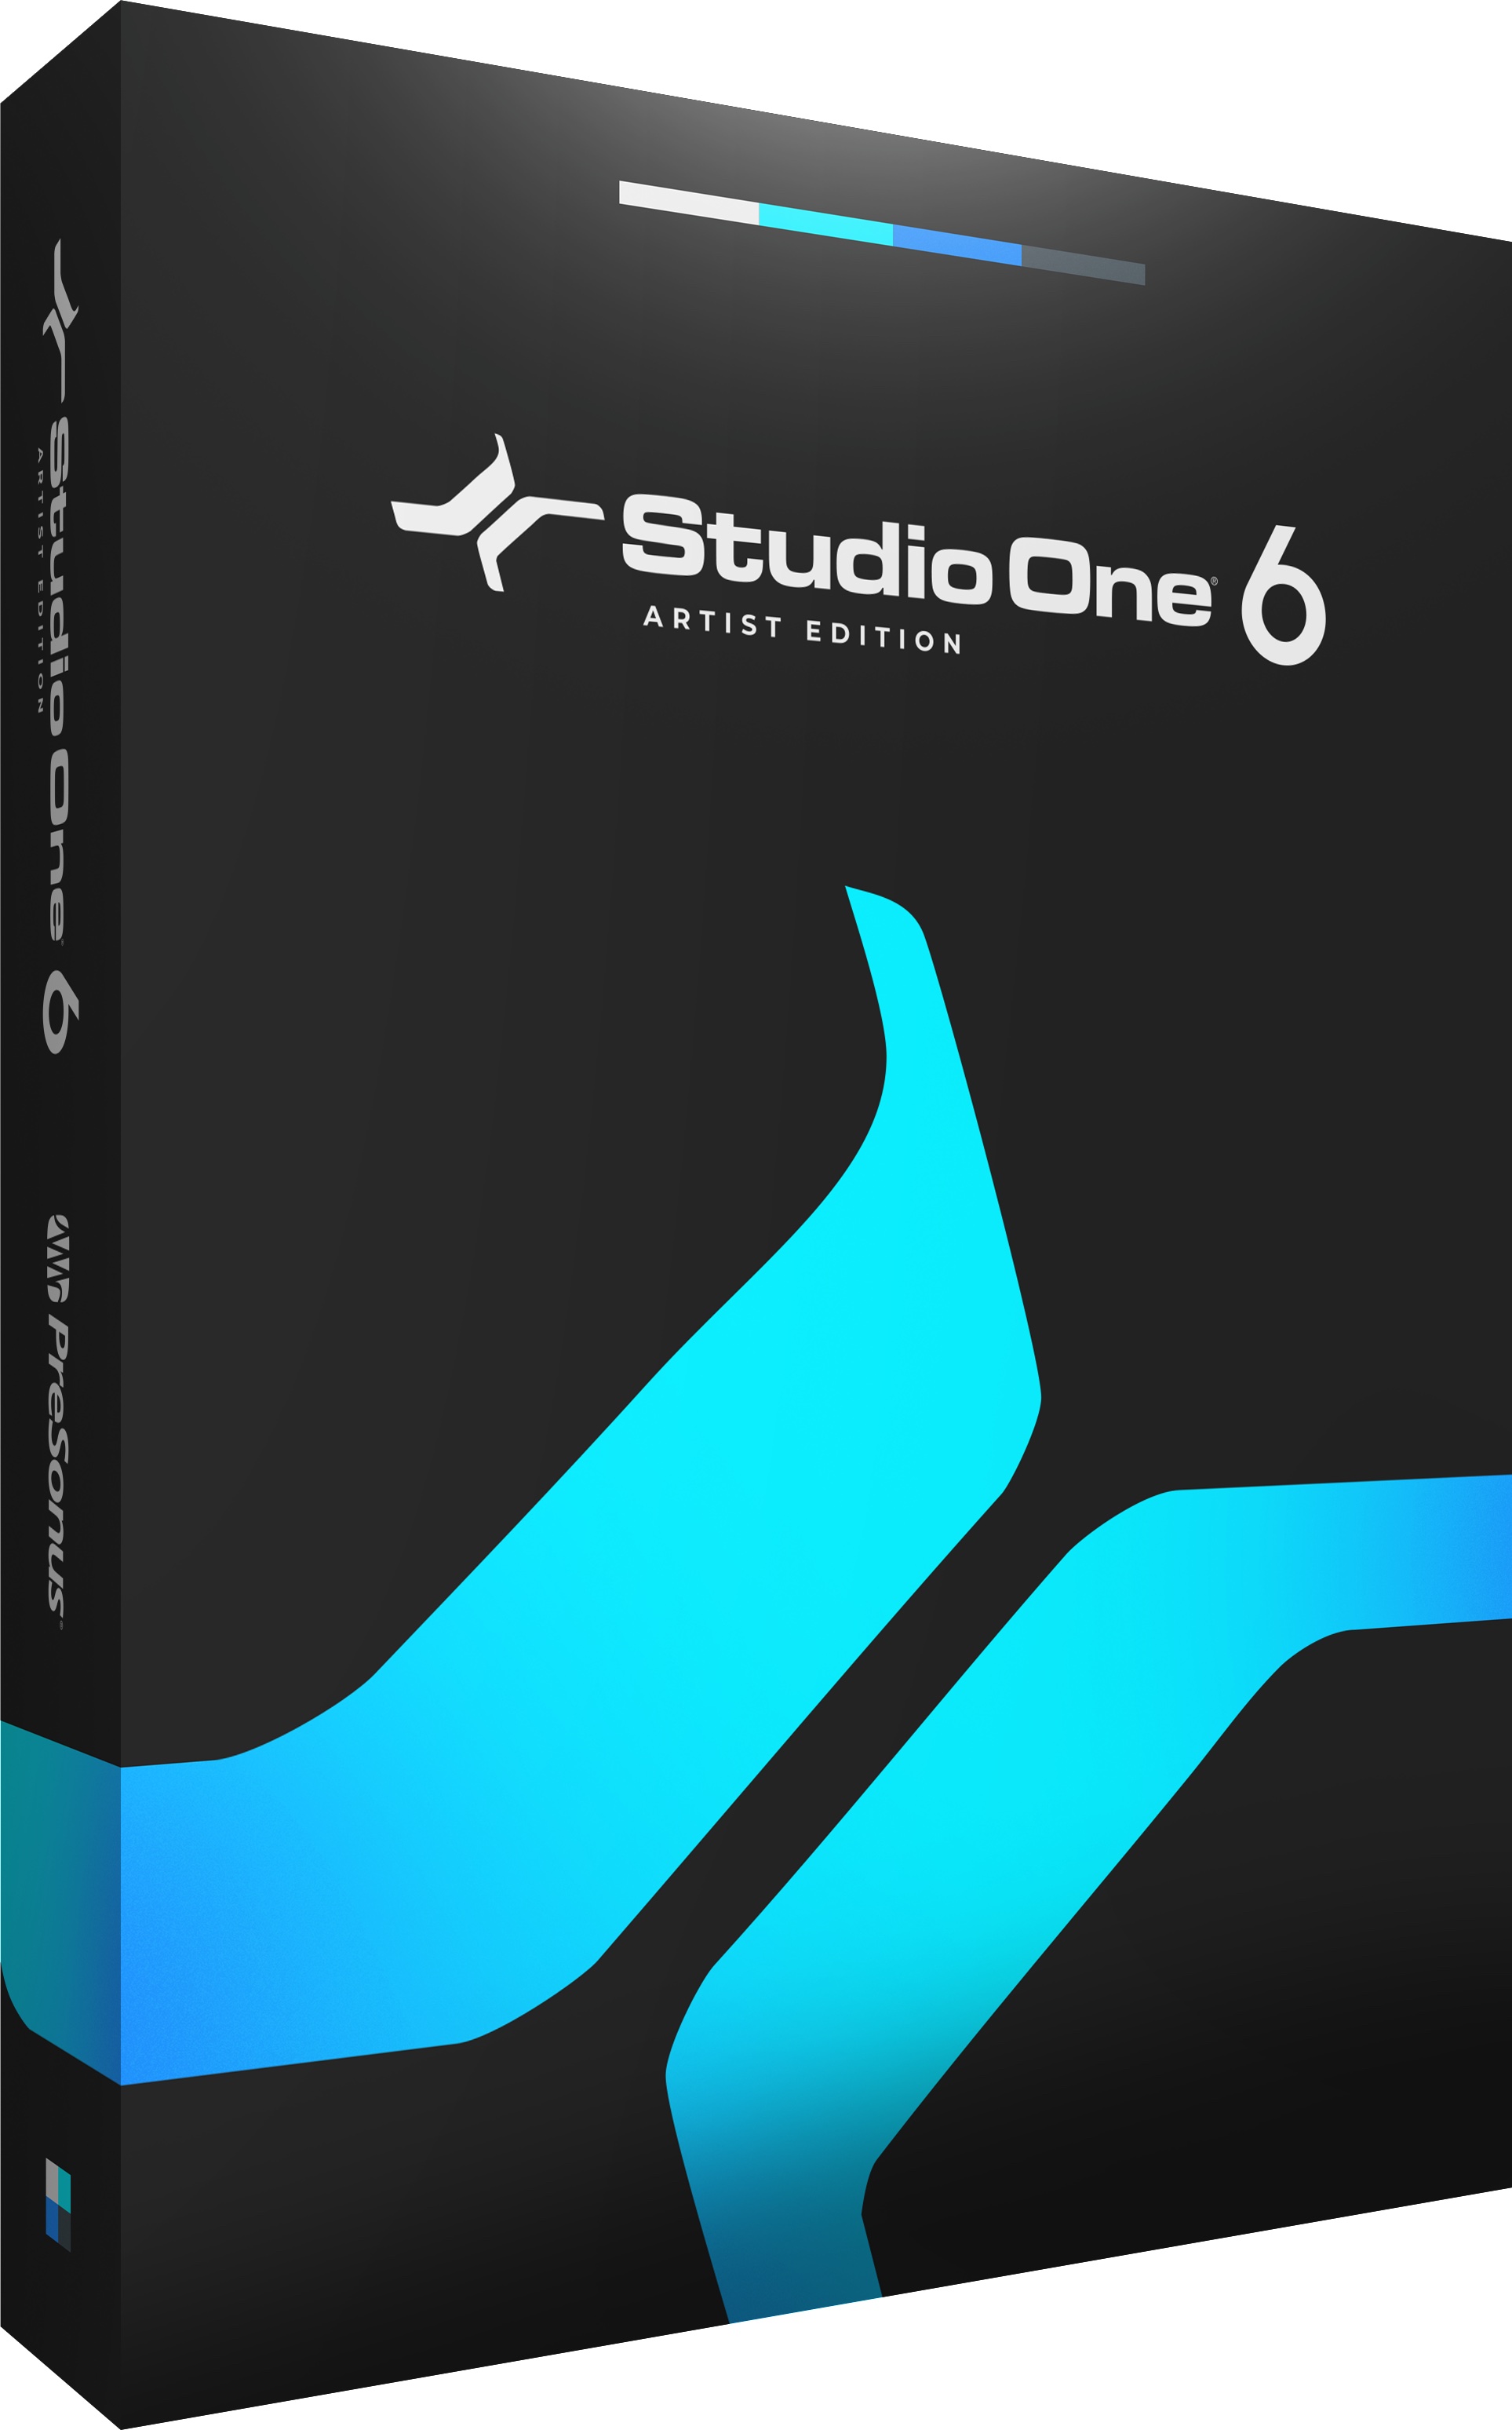 PreSonus Software Studio One 6 ARTIST